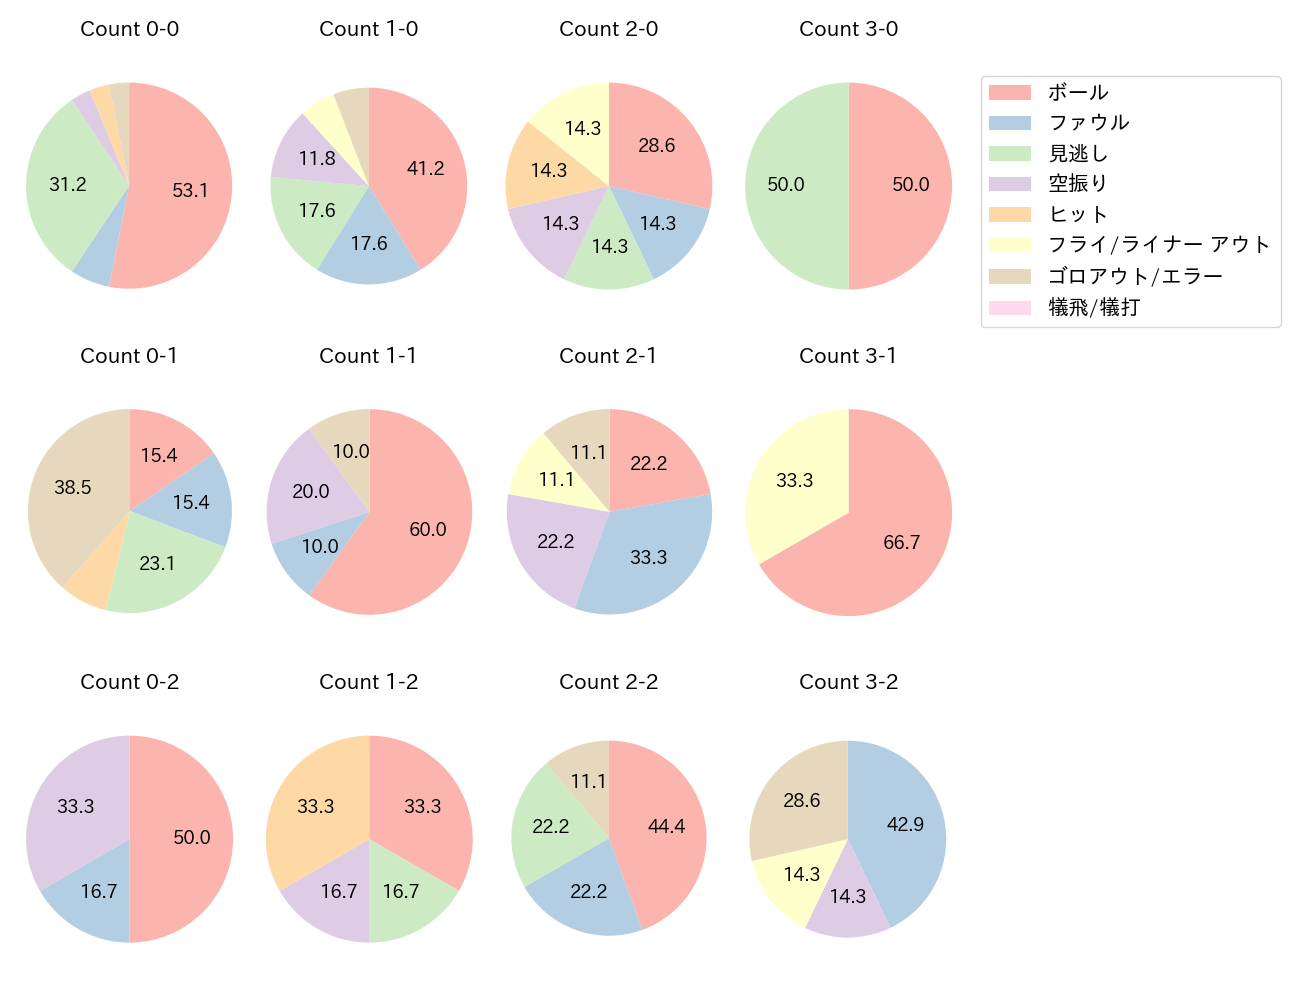 松原 聖弥の球数分布(2022年オープン戦)